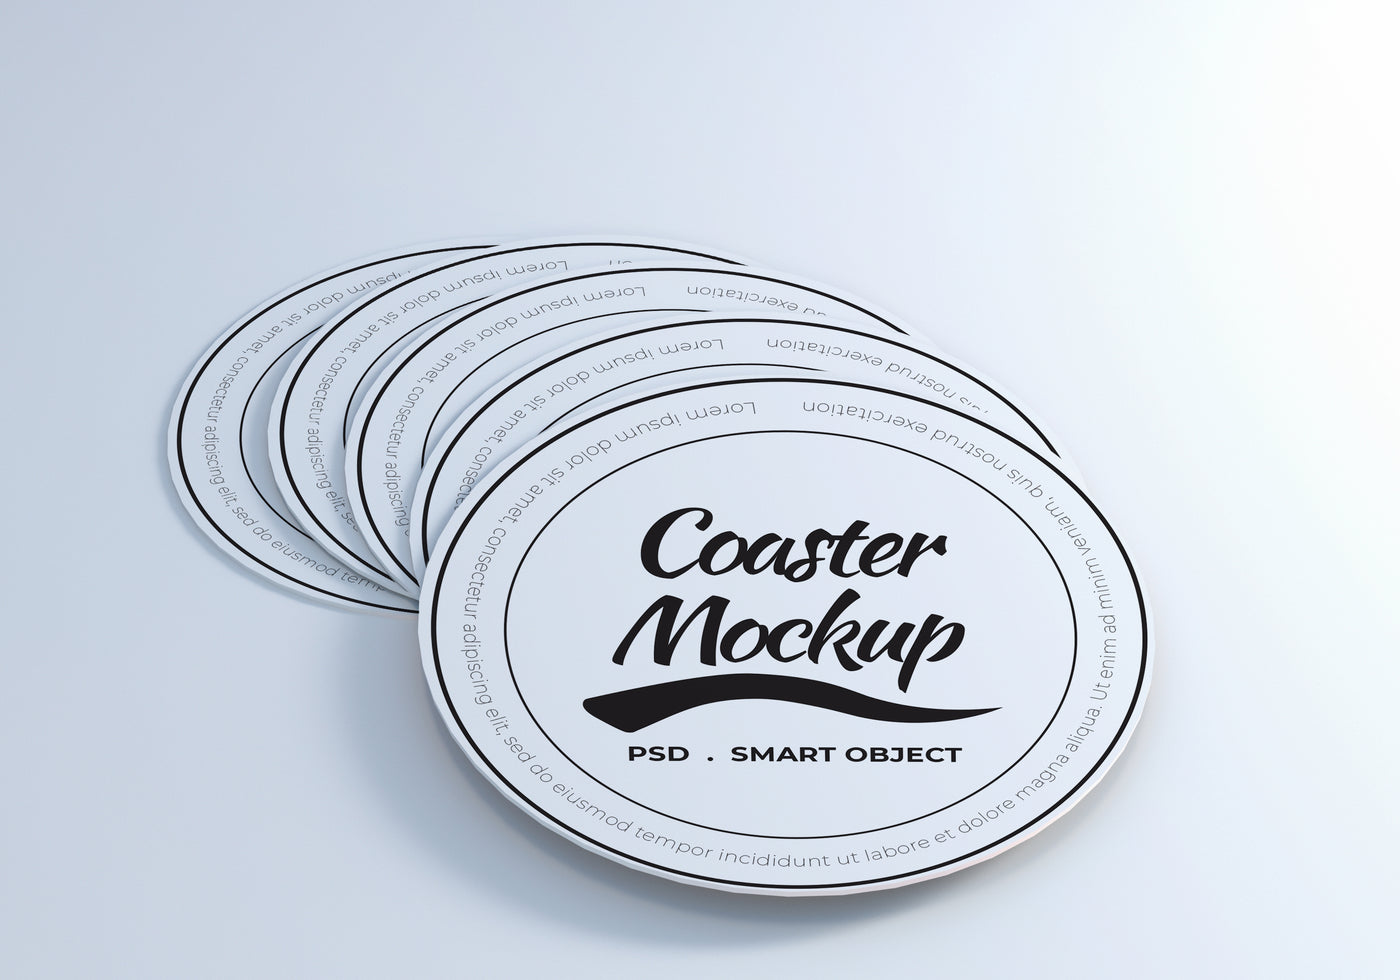 Coaster Printing